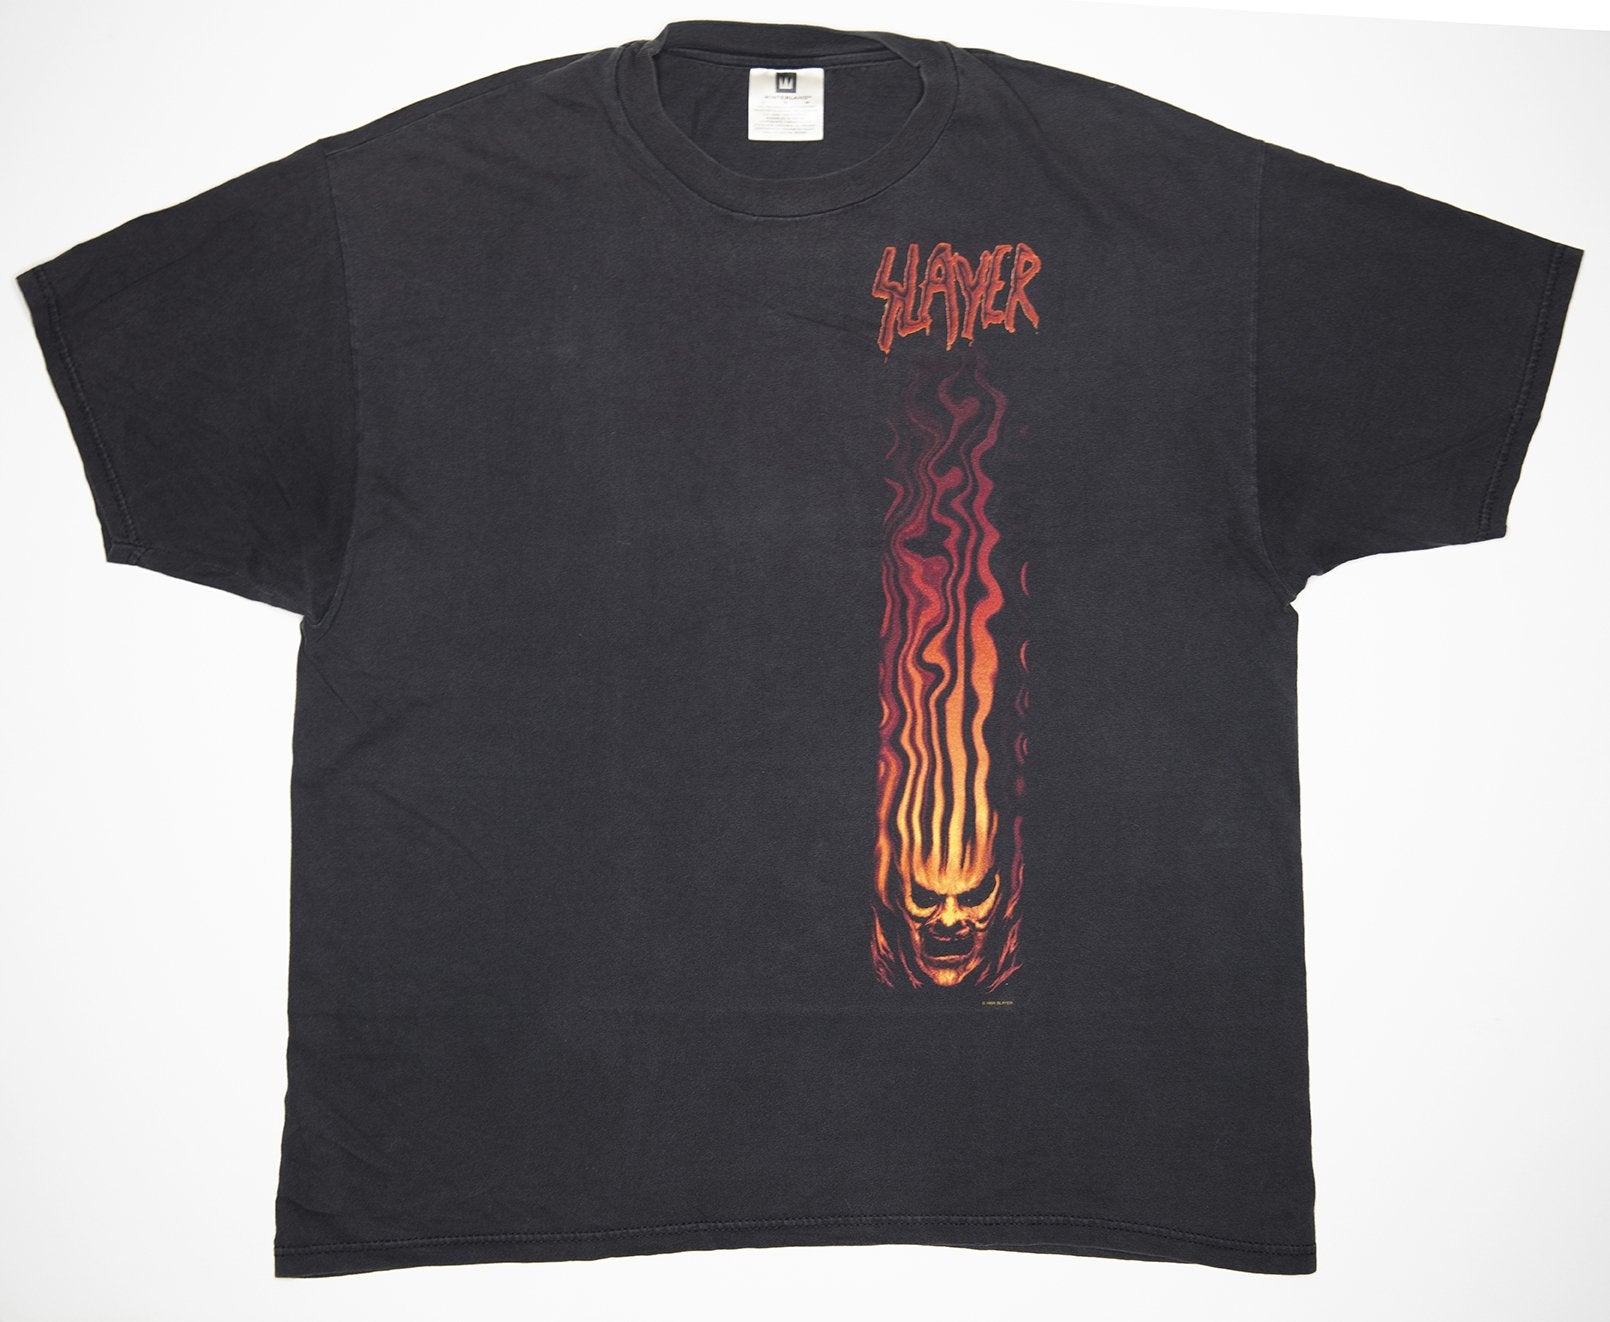 Slayer - Diabolus In Musica 1998 Tour Shirt Size XL